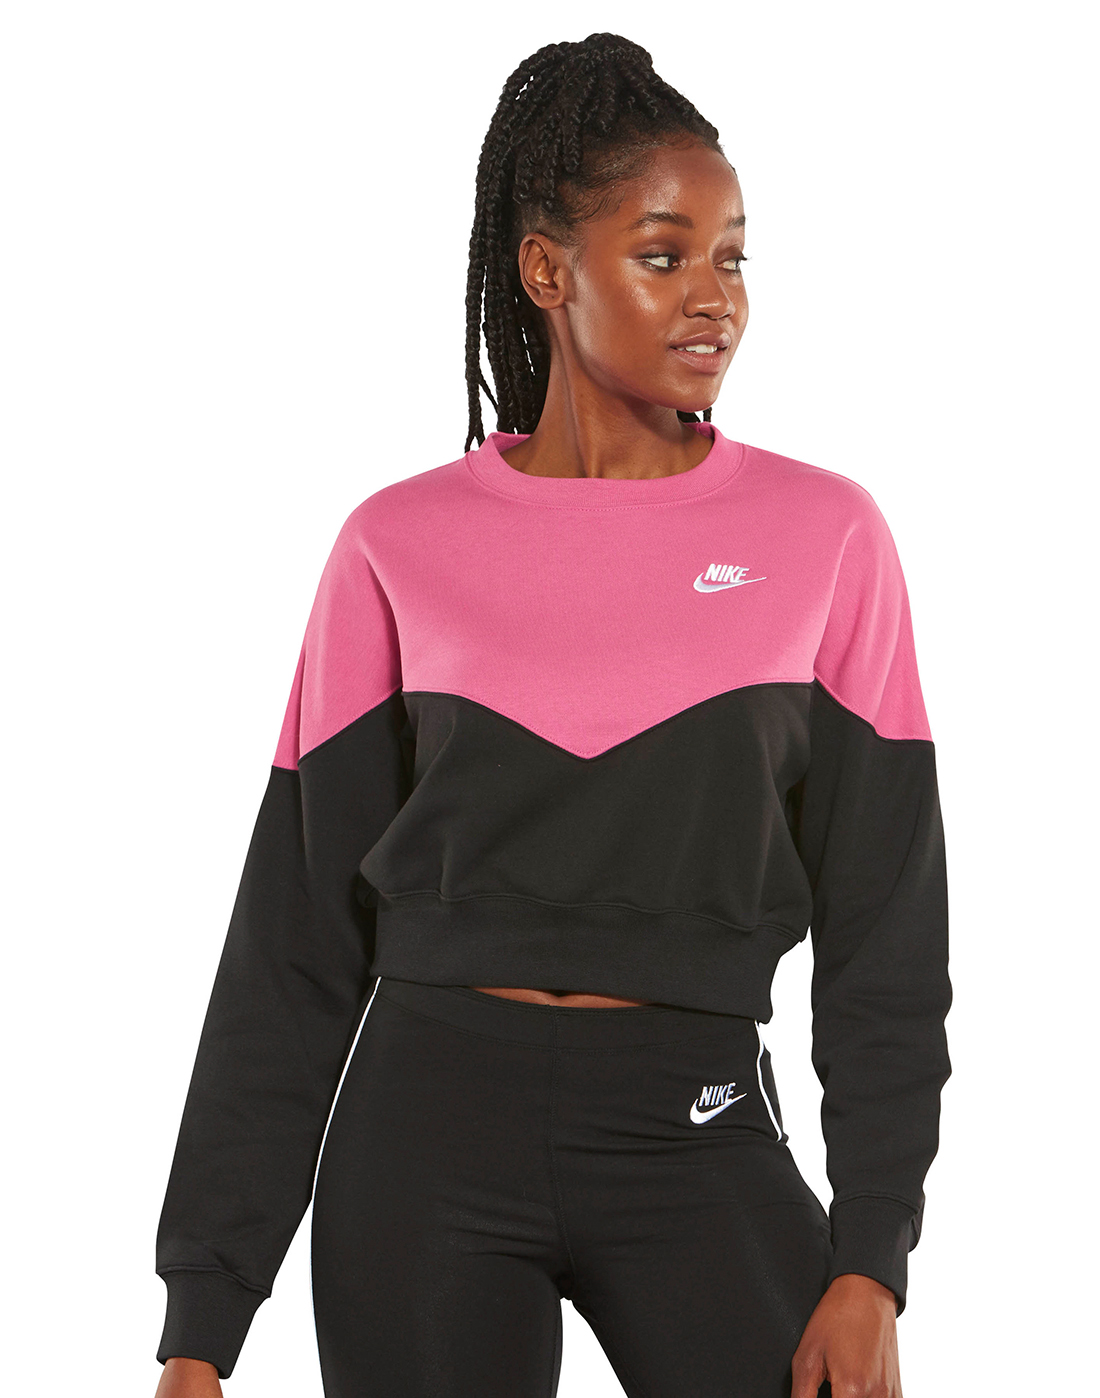 Women's Pink & Black Nike Cropped Sweatshirt | Life Style Sports